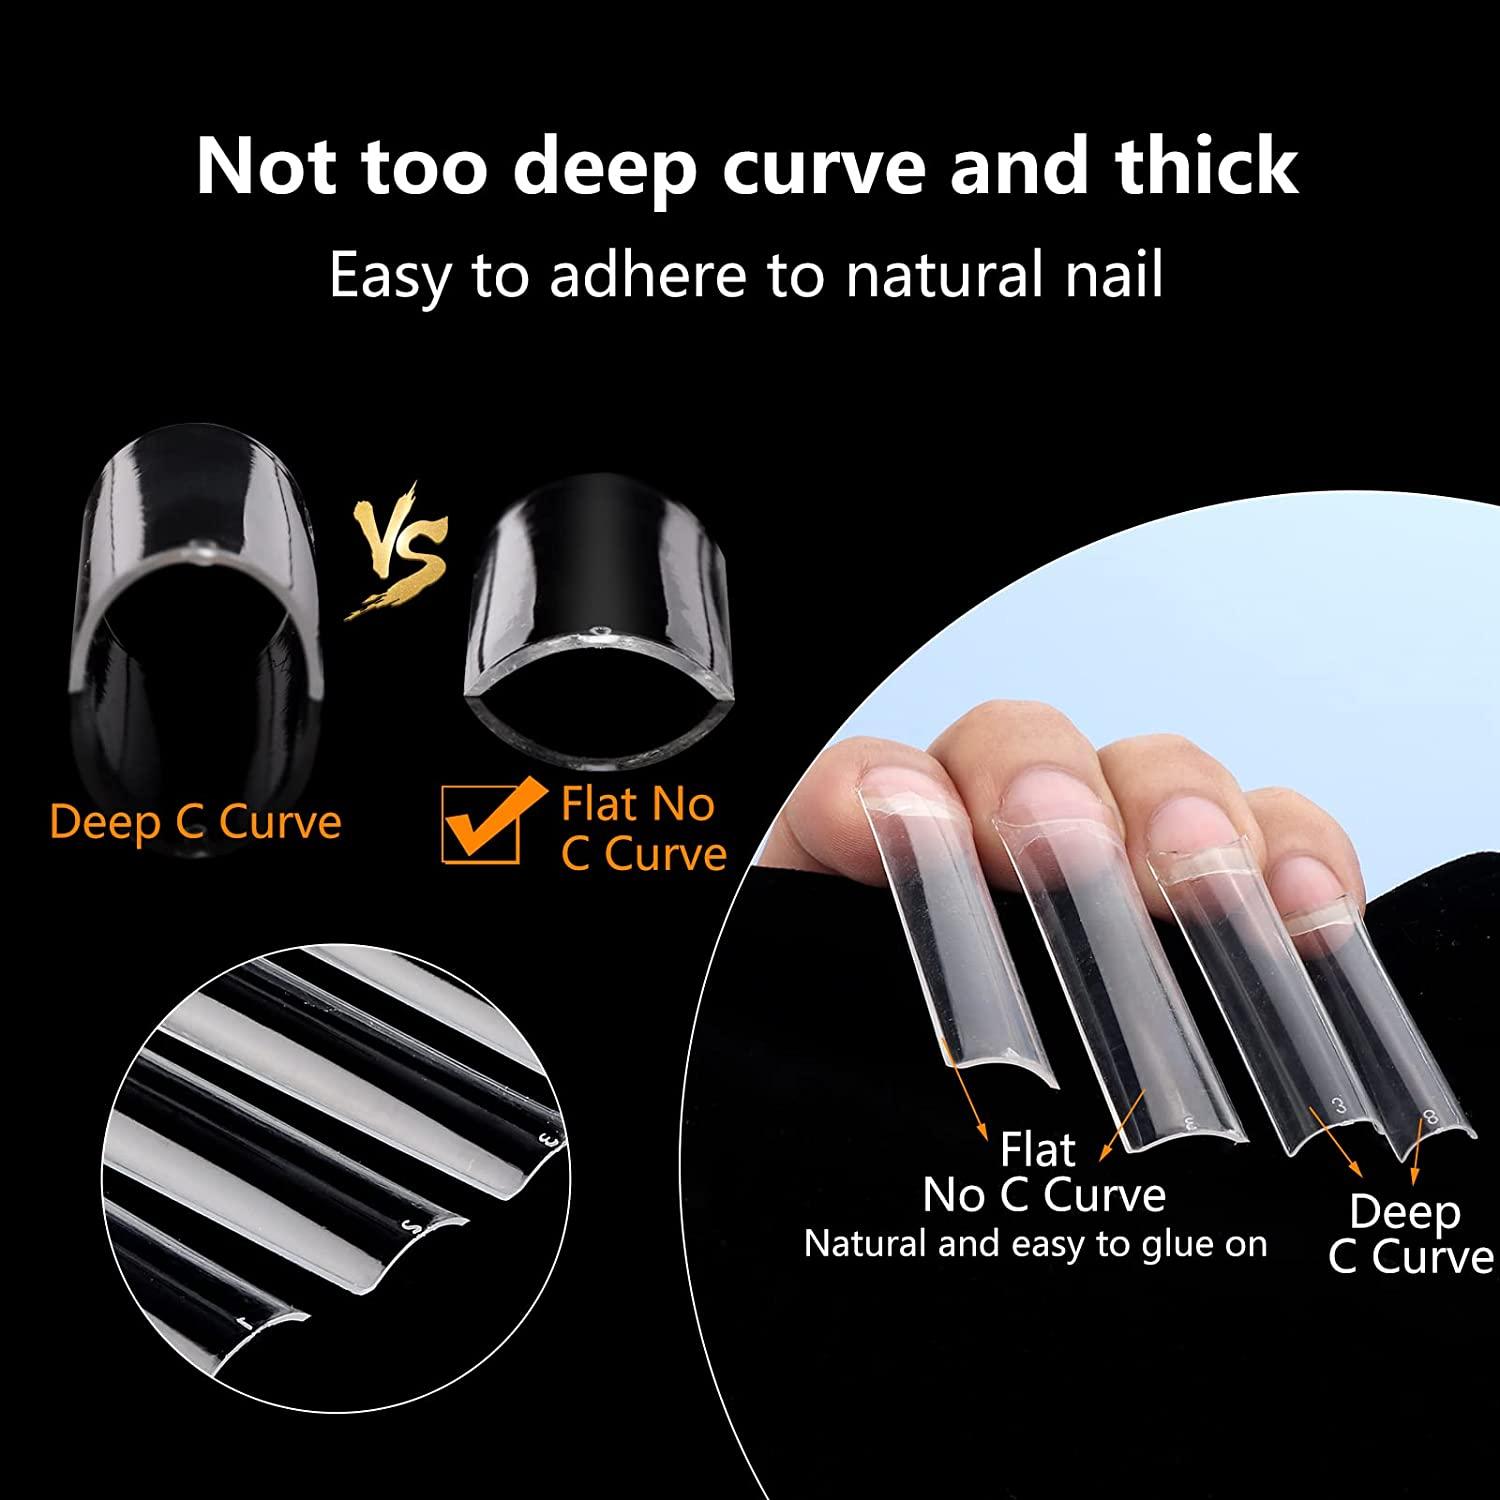 Yimart Long C Curved False Nail Tips - C Curved Nail Tips - Long C Curve  False Nails - 200pcs/box XL C Curve Fake Nails Premium Square French  Acrylic Nail Tips … |